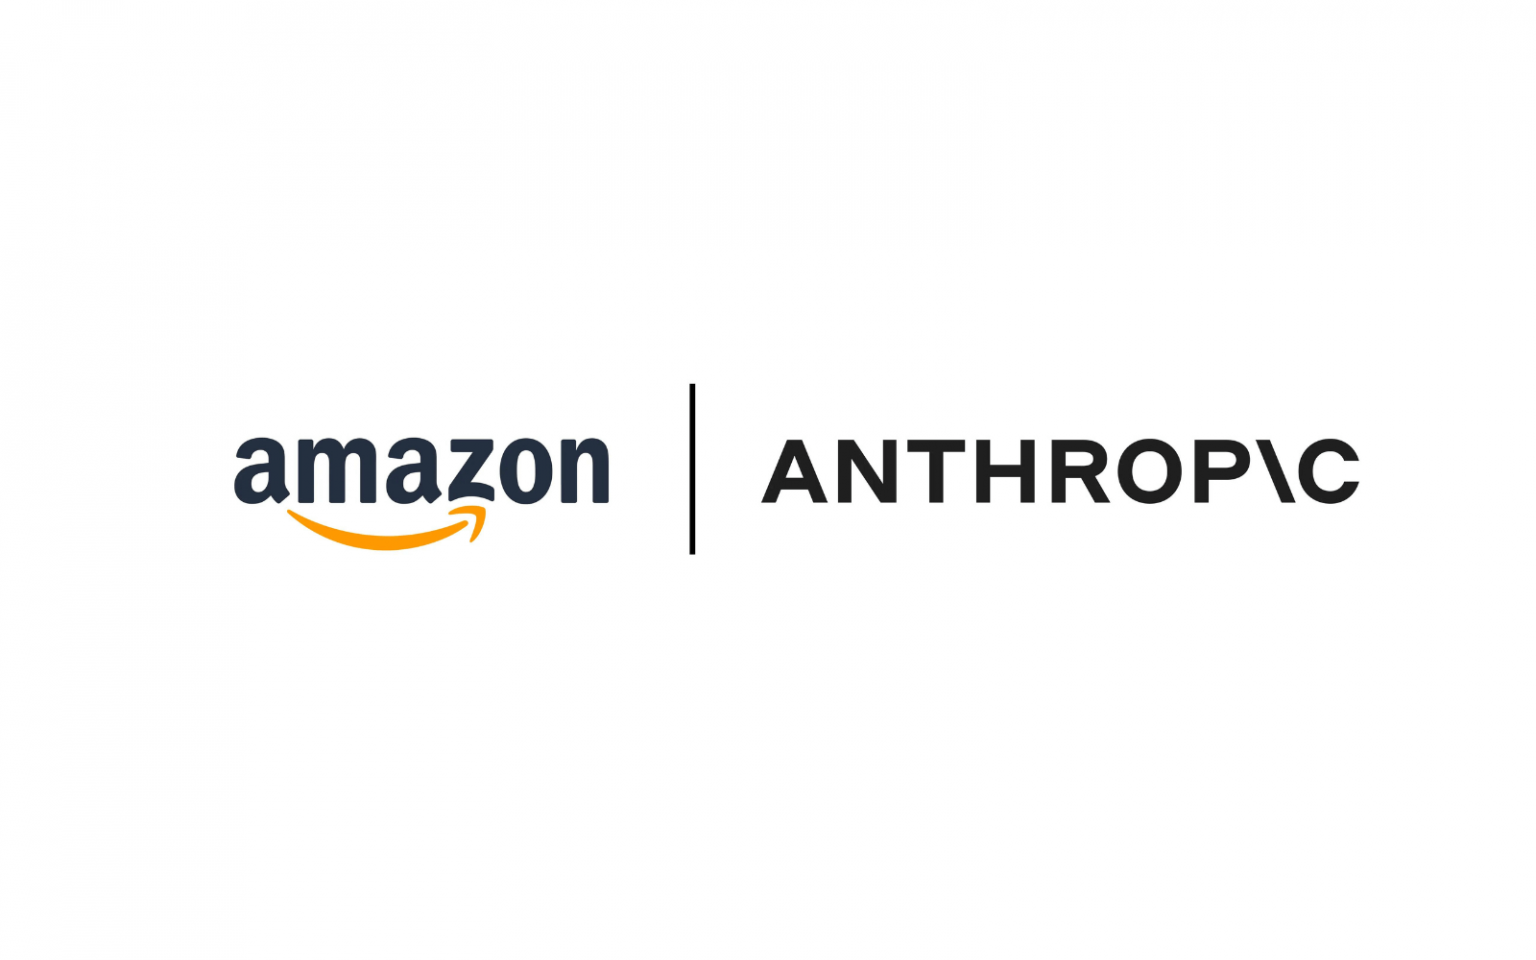 Amazon Anthropic $4 billion